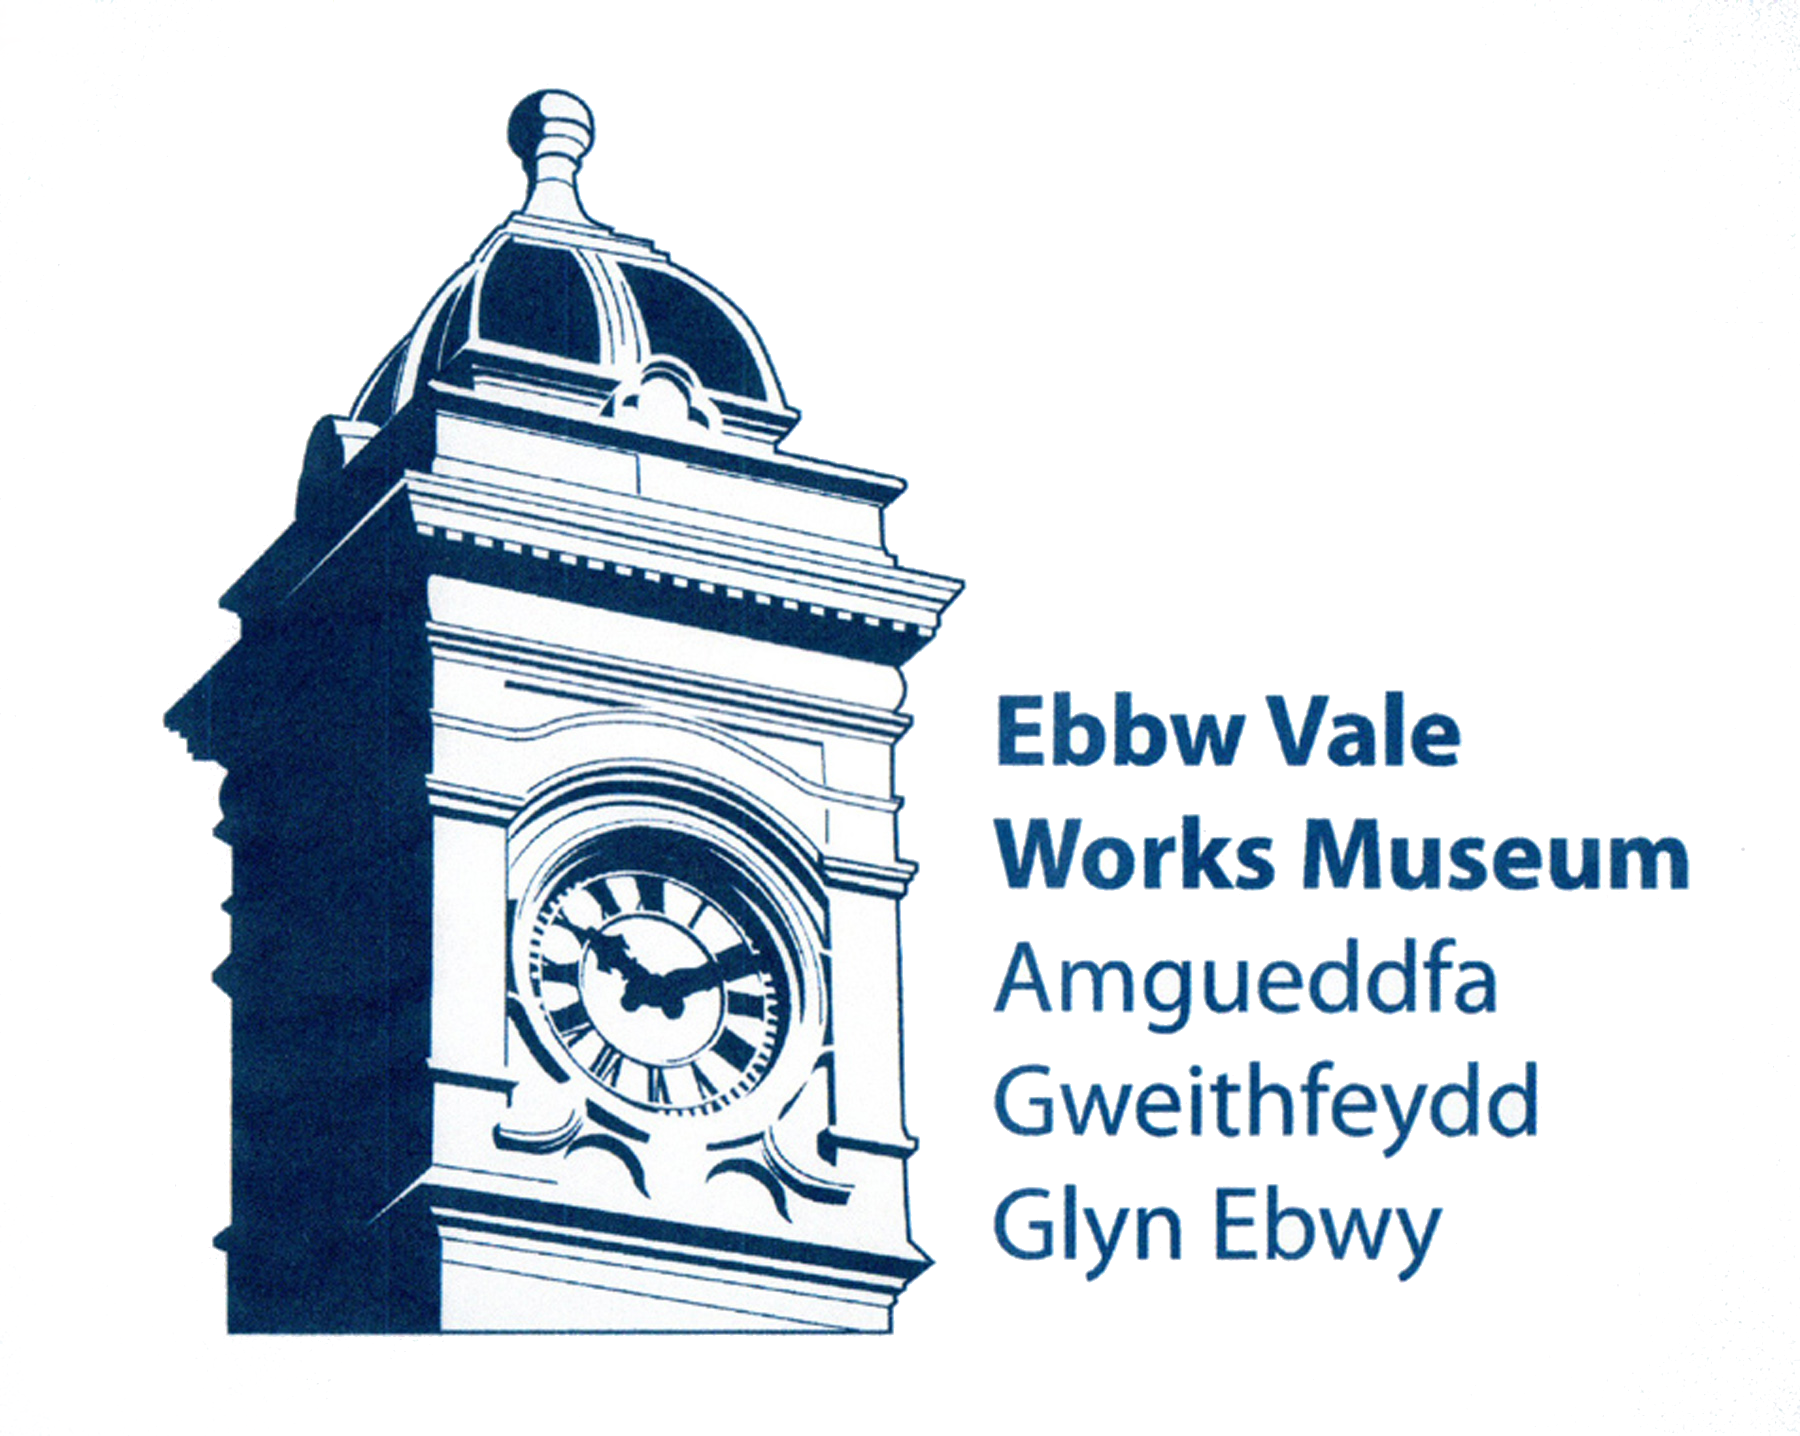 Ebbw Vale Works Museum